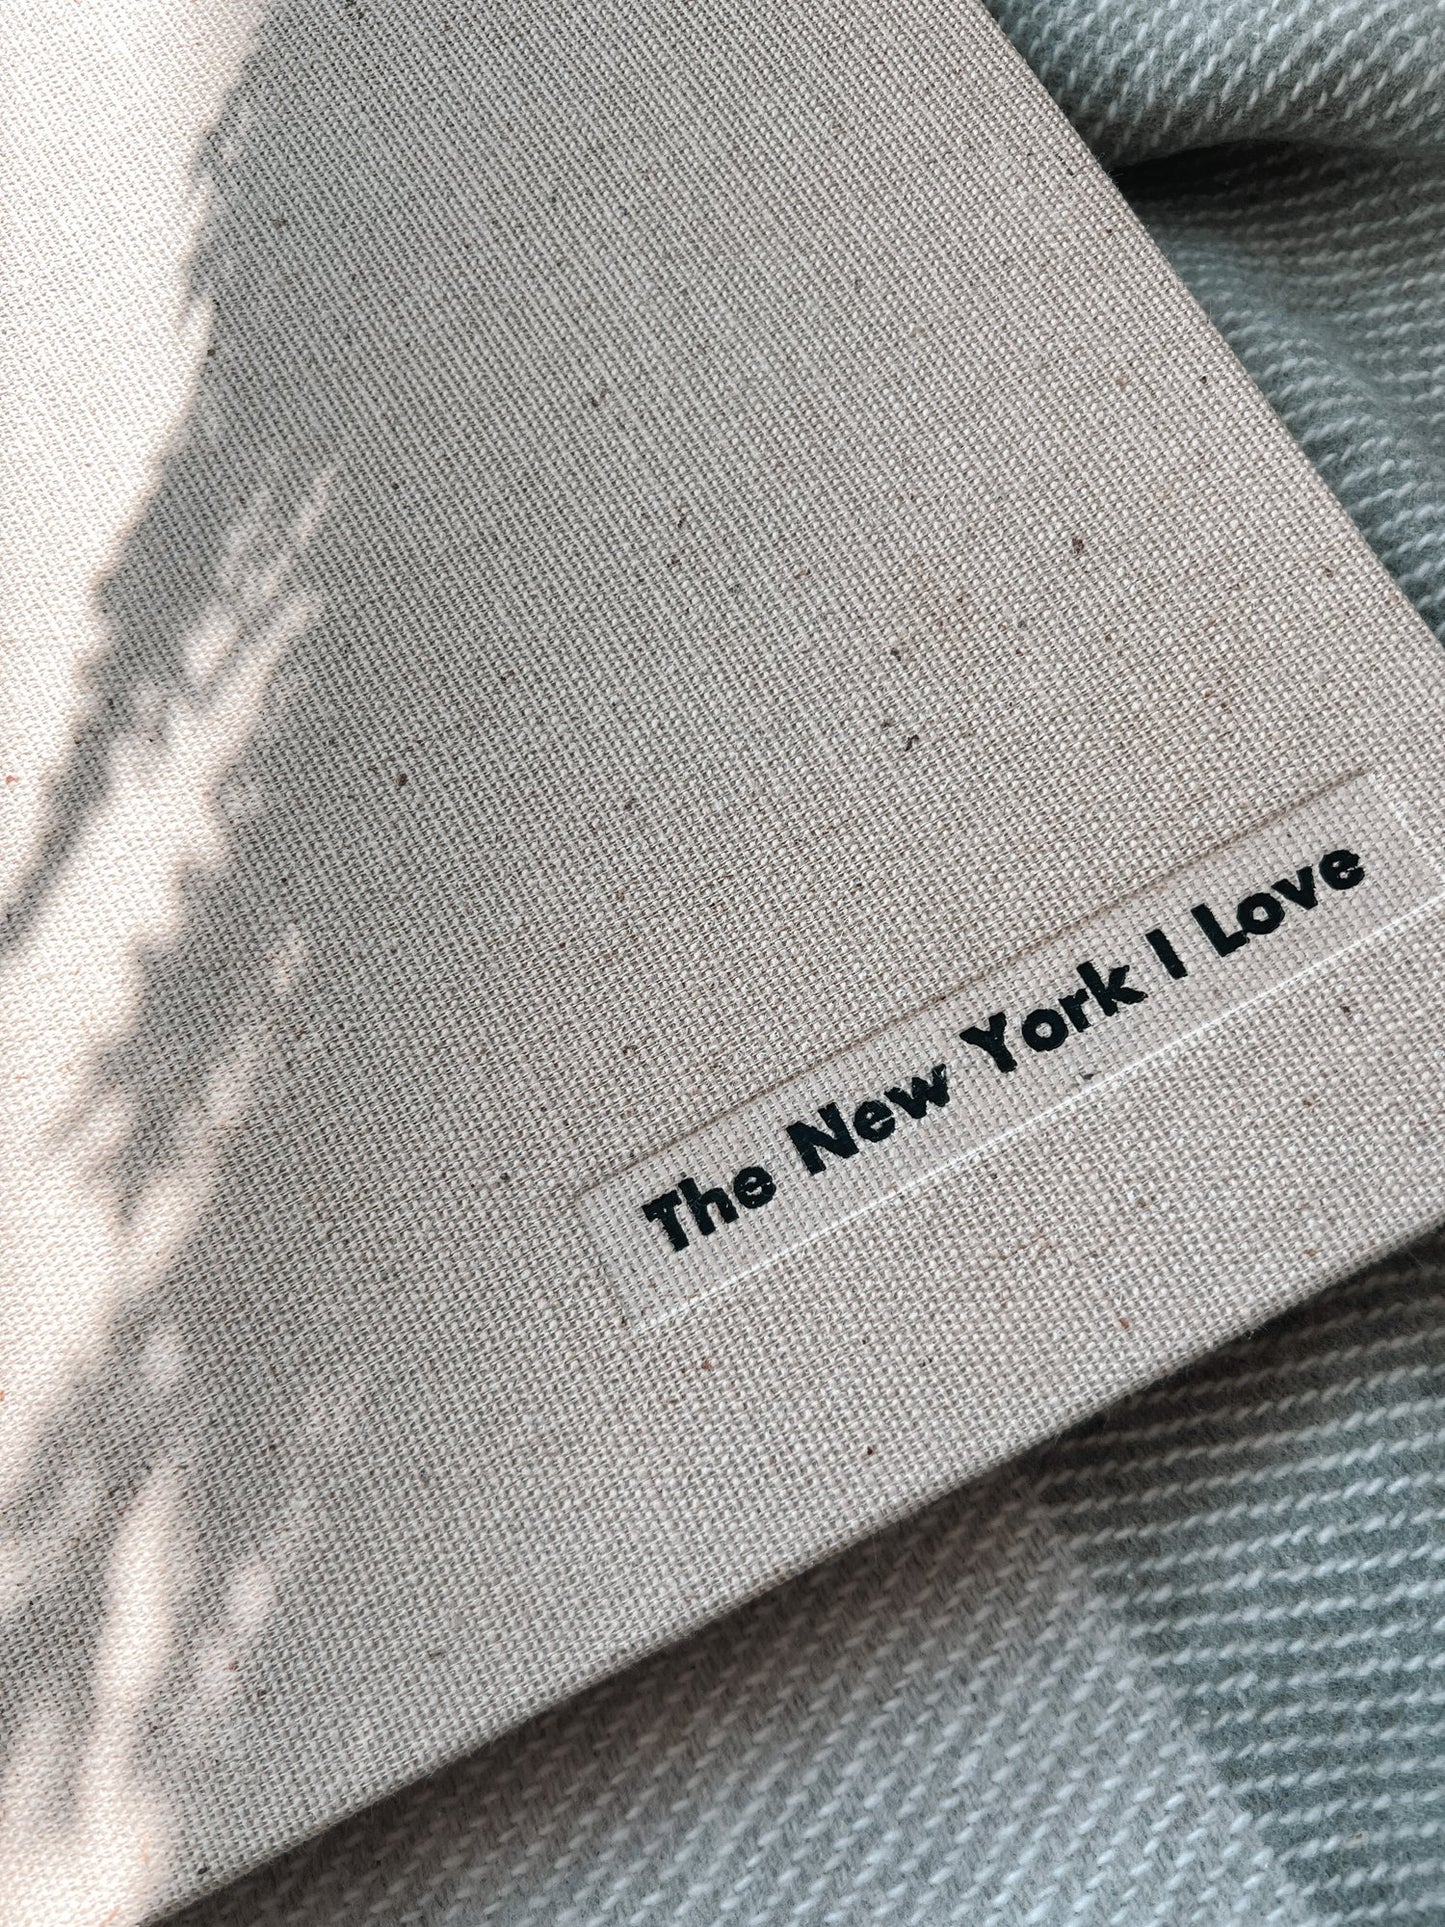 New York Love Book